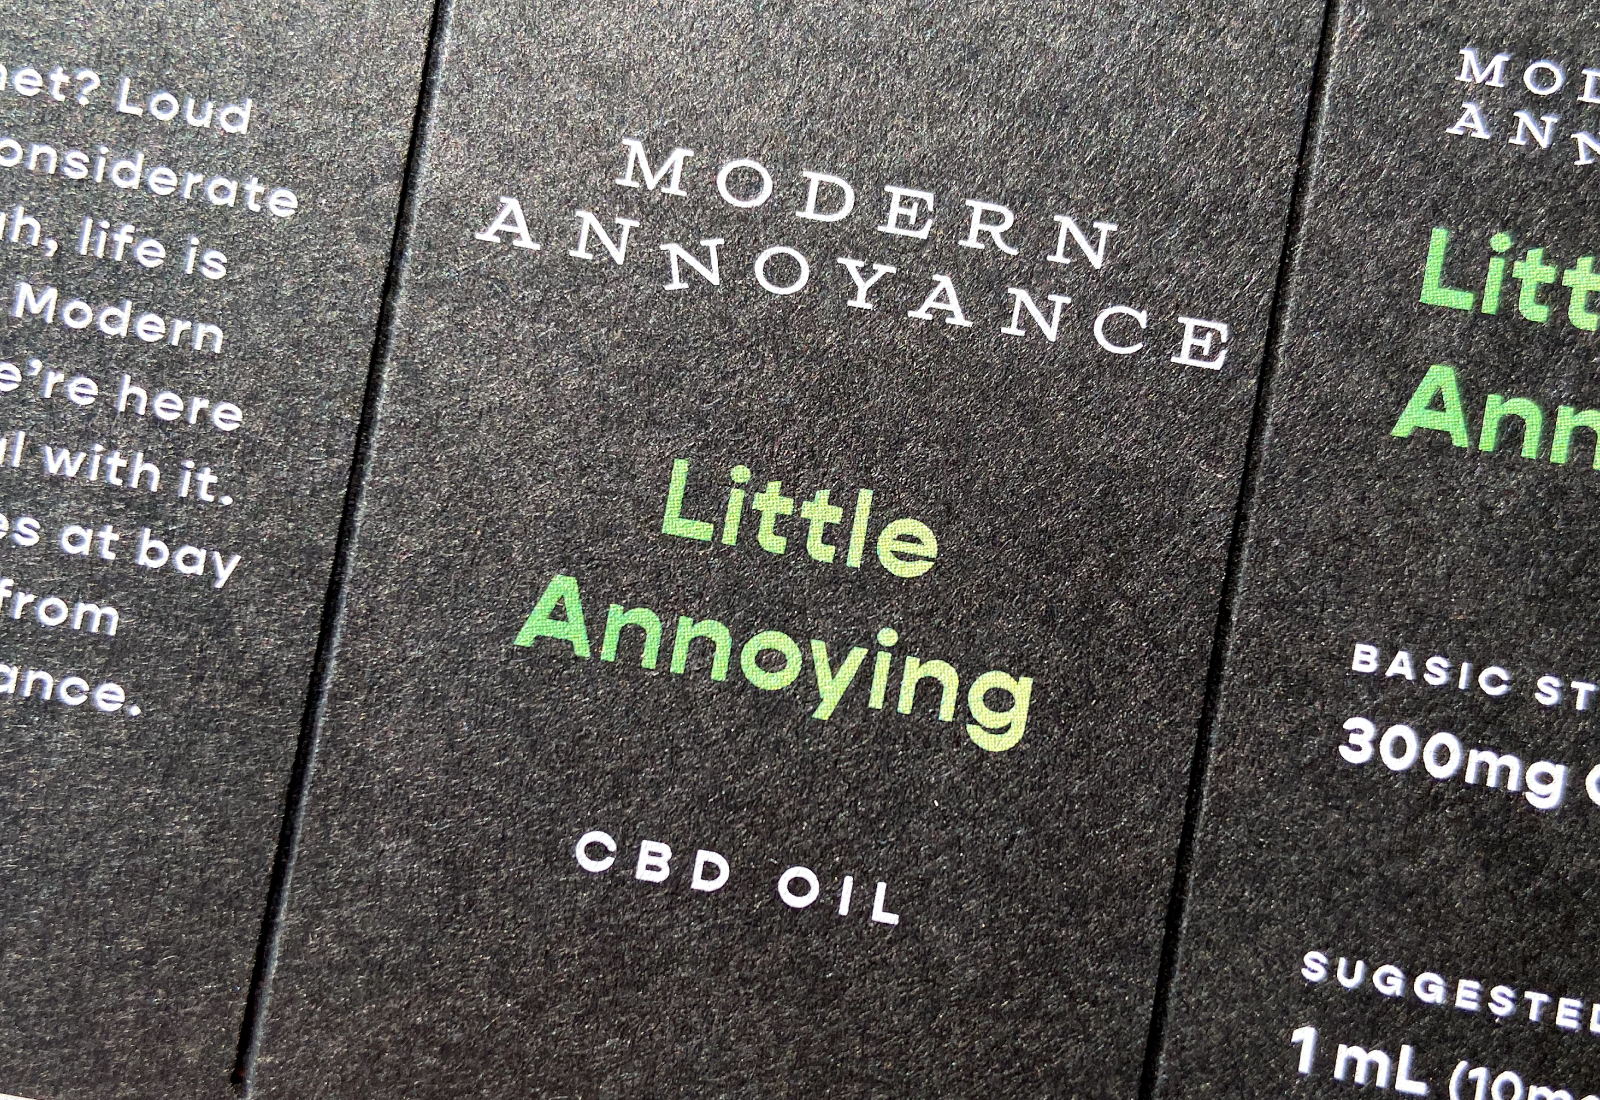 CBD Oil Labels and Packaging Design | Brand Identity for Modern Annoyance CBD